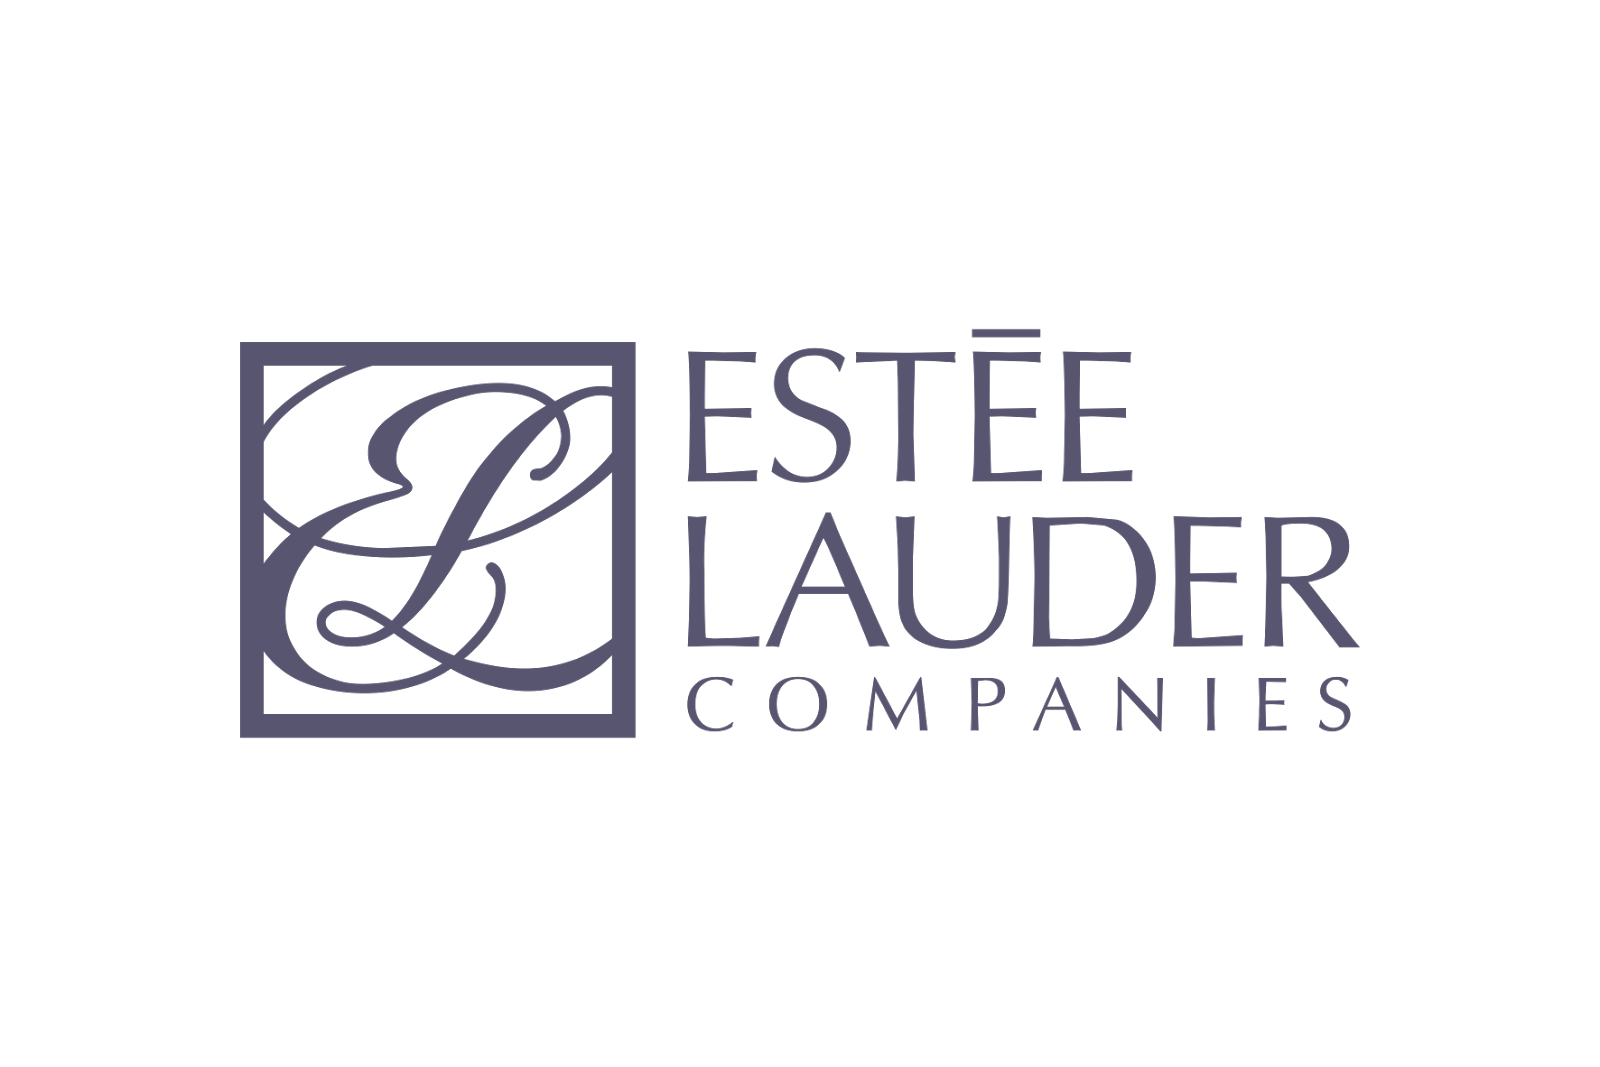 Estee Lauder Logotipo PNG image